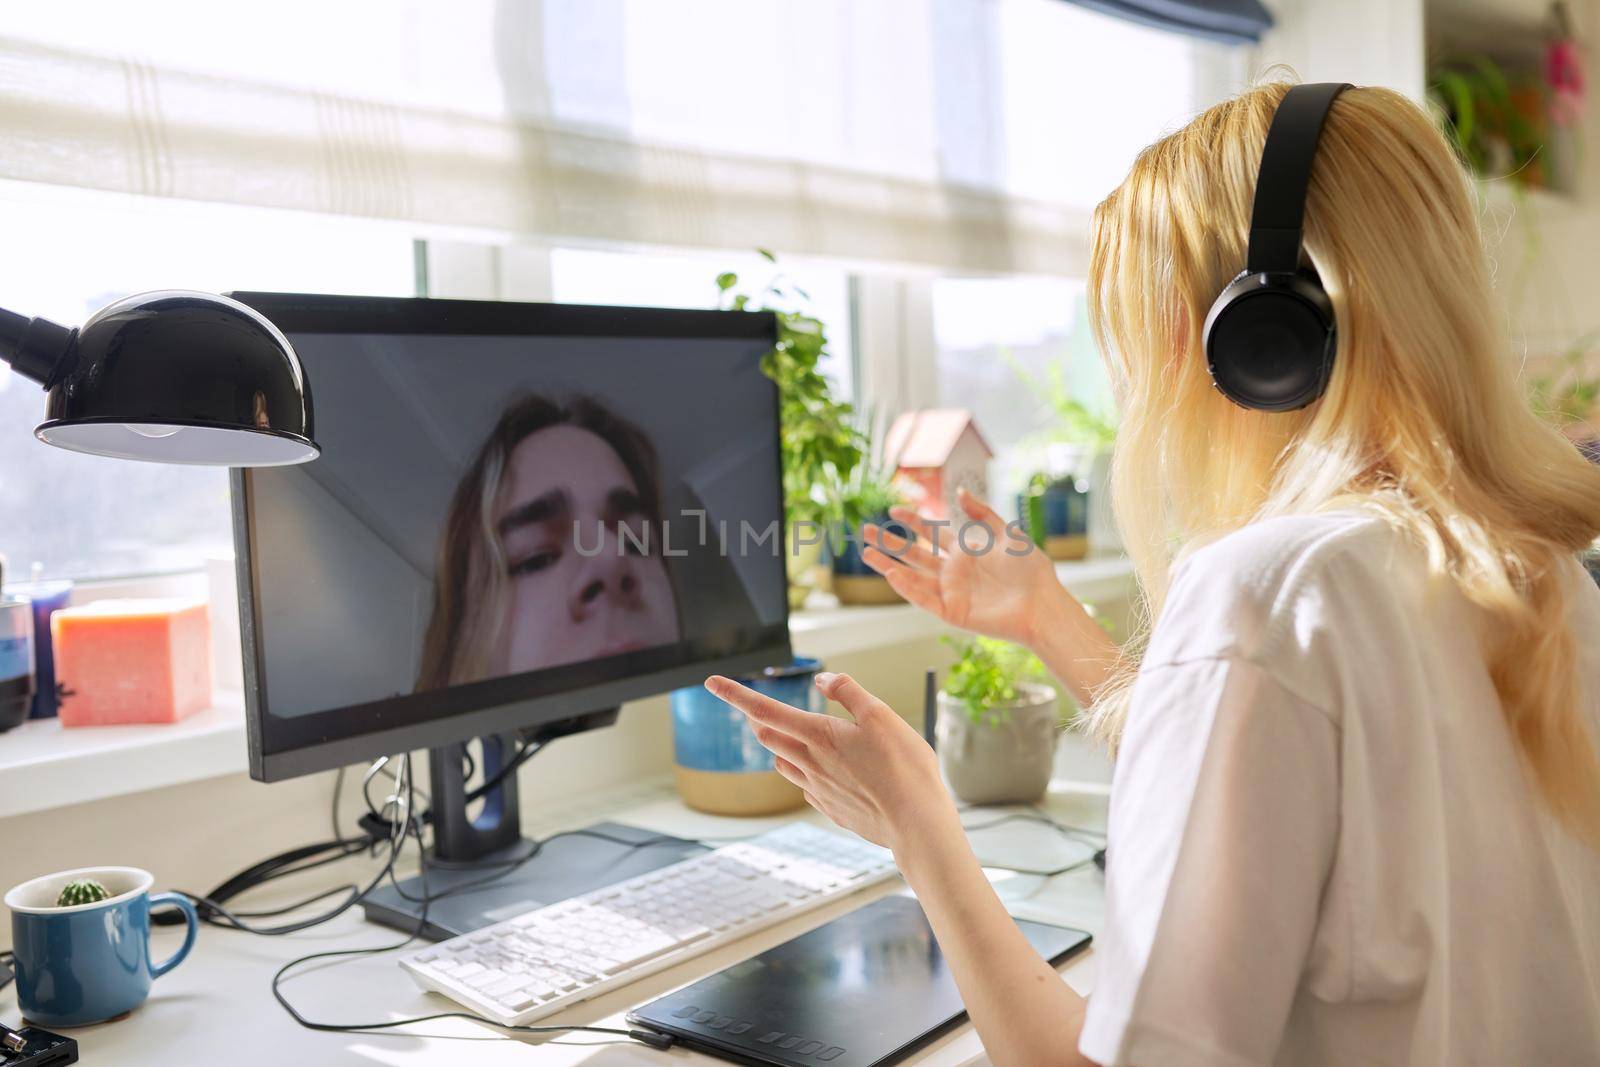 Teen female in headphones talking online with her friend male teenager by VH-studio